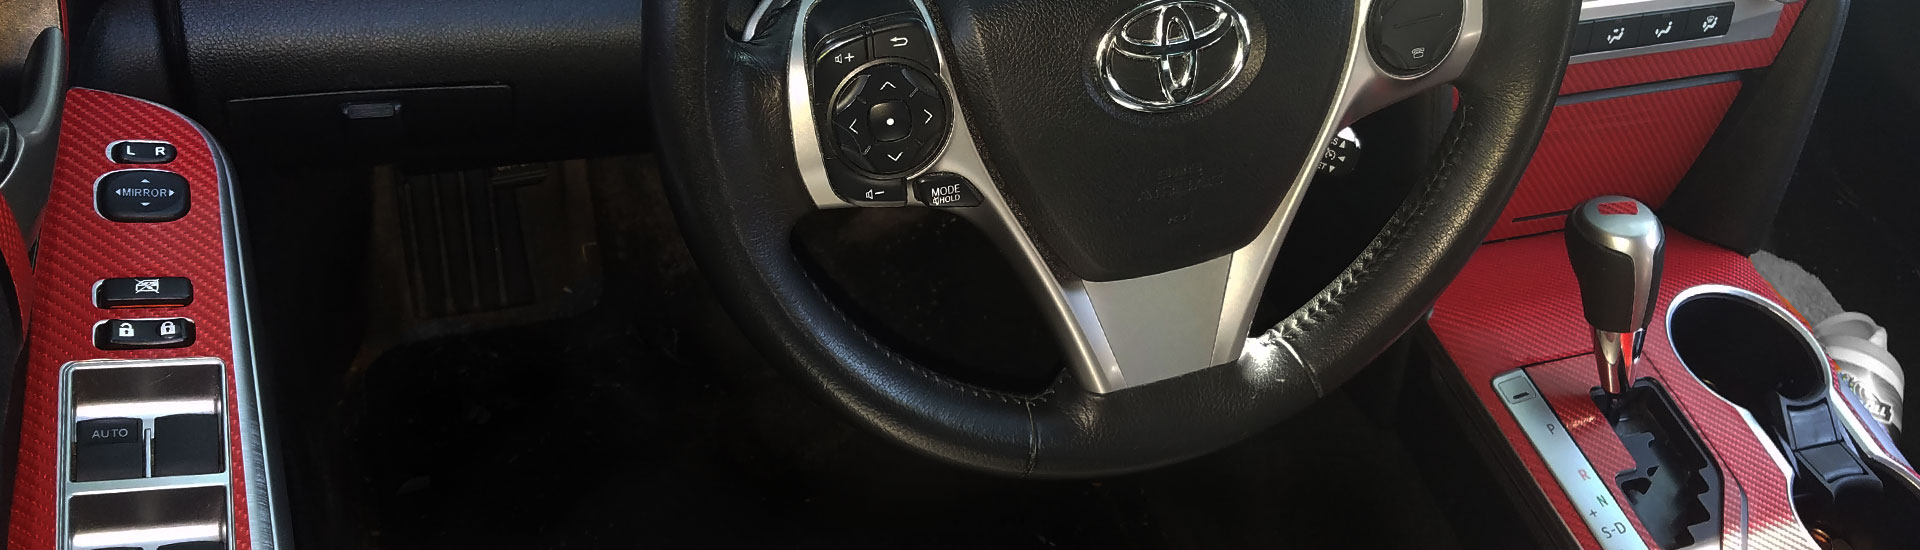 2013 Toyota Camry Dash Trim Kits